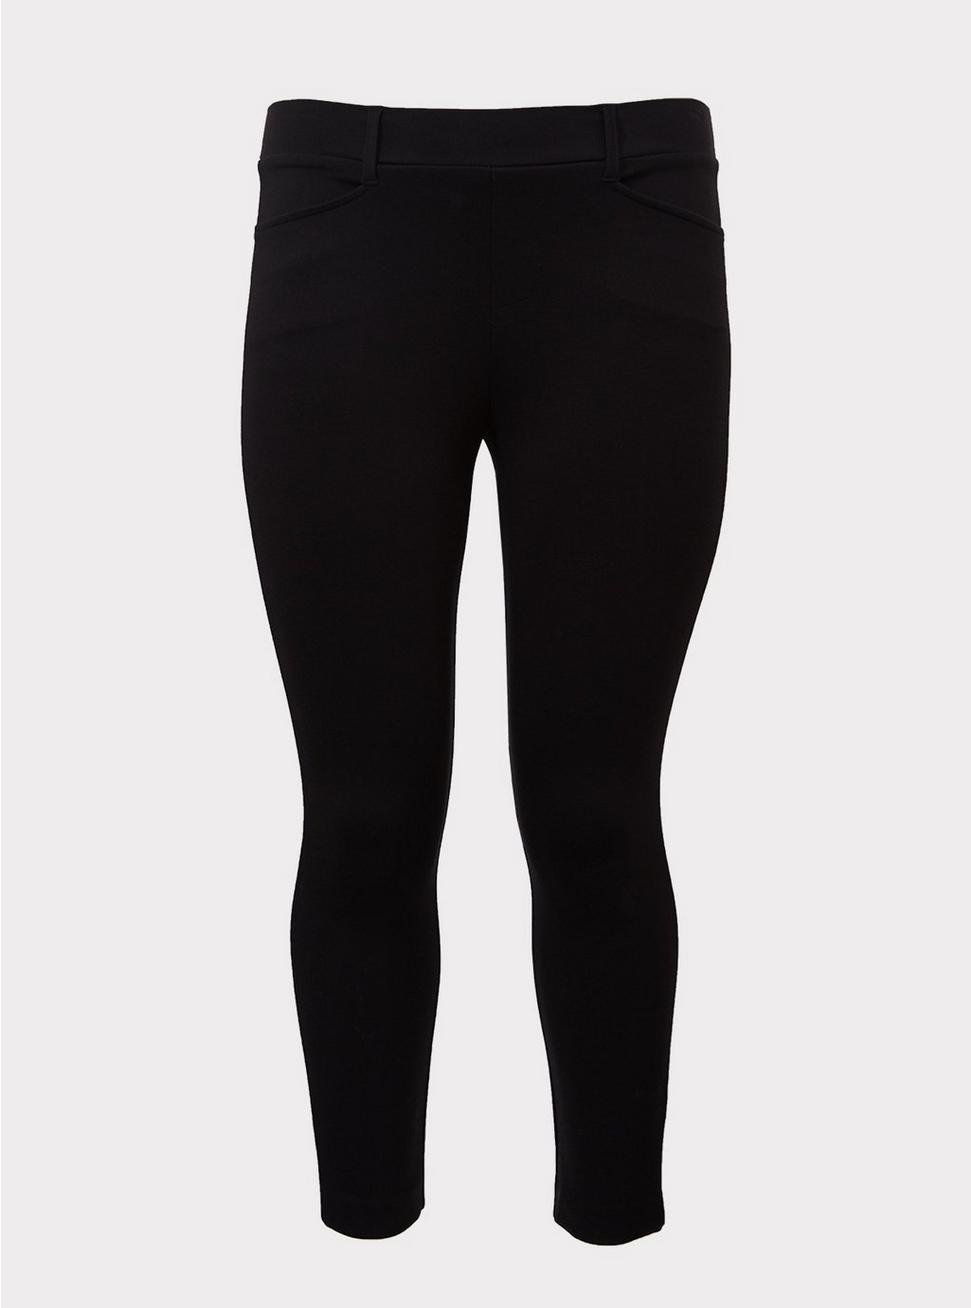 Plus Size - Black & White Stripe Ponte Stretch Pull-On Pant - Torrid